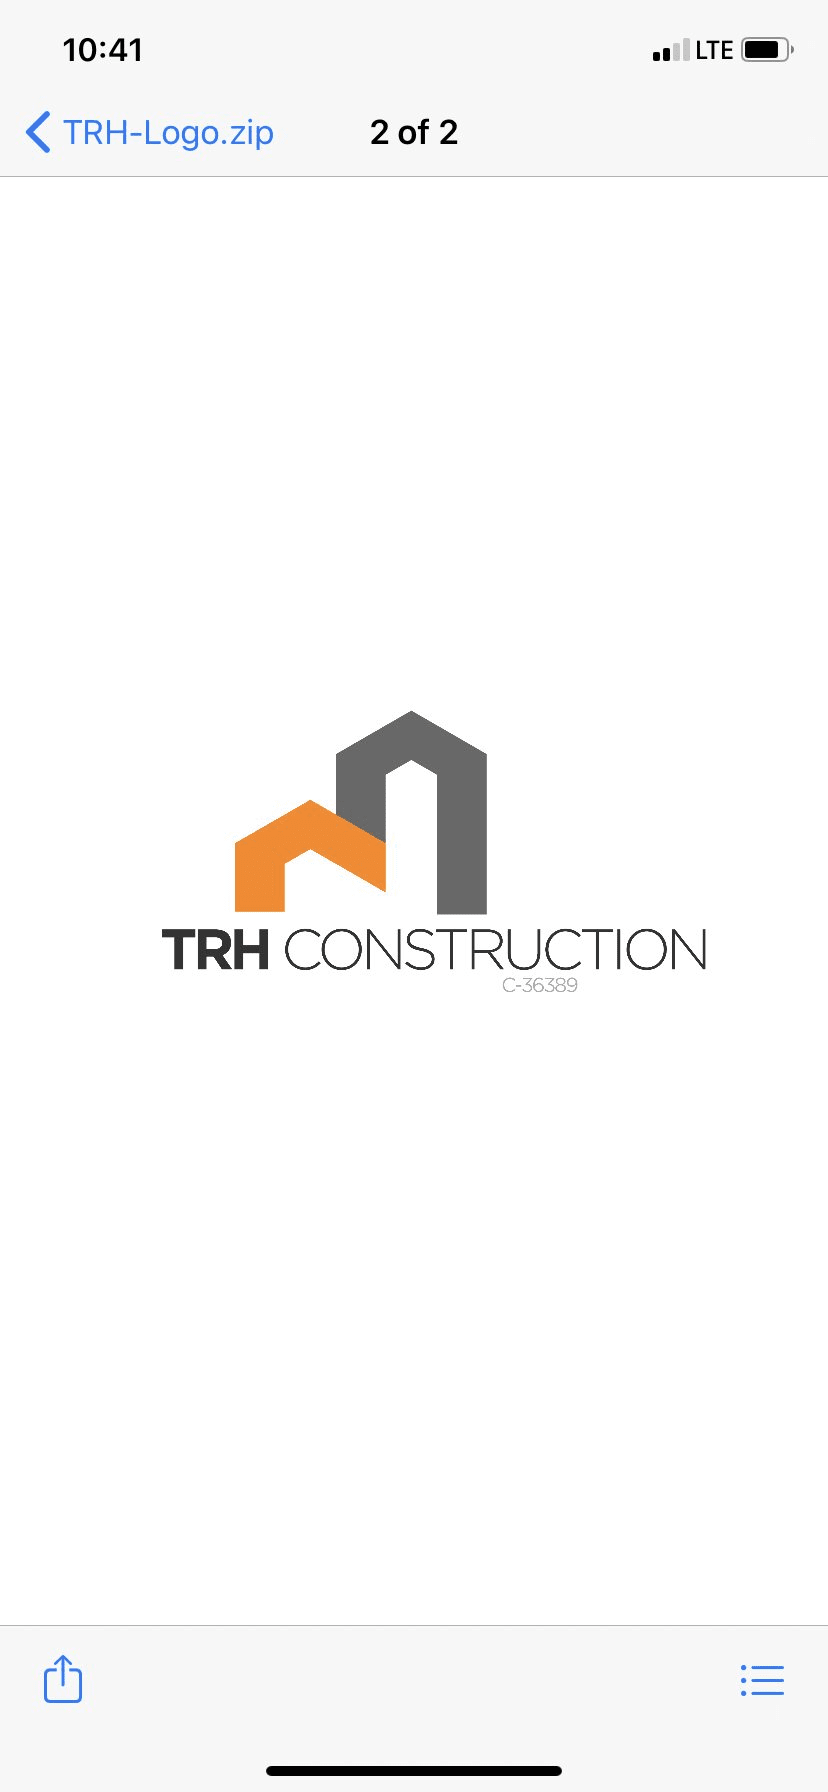 TRH Construction